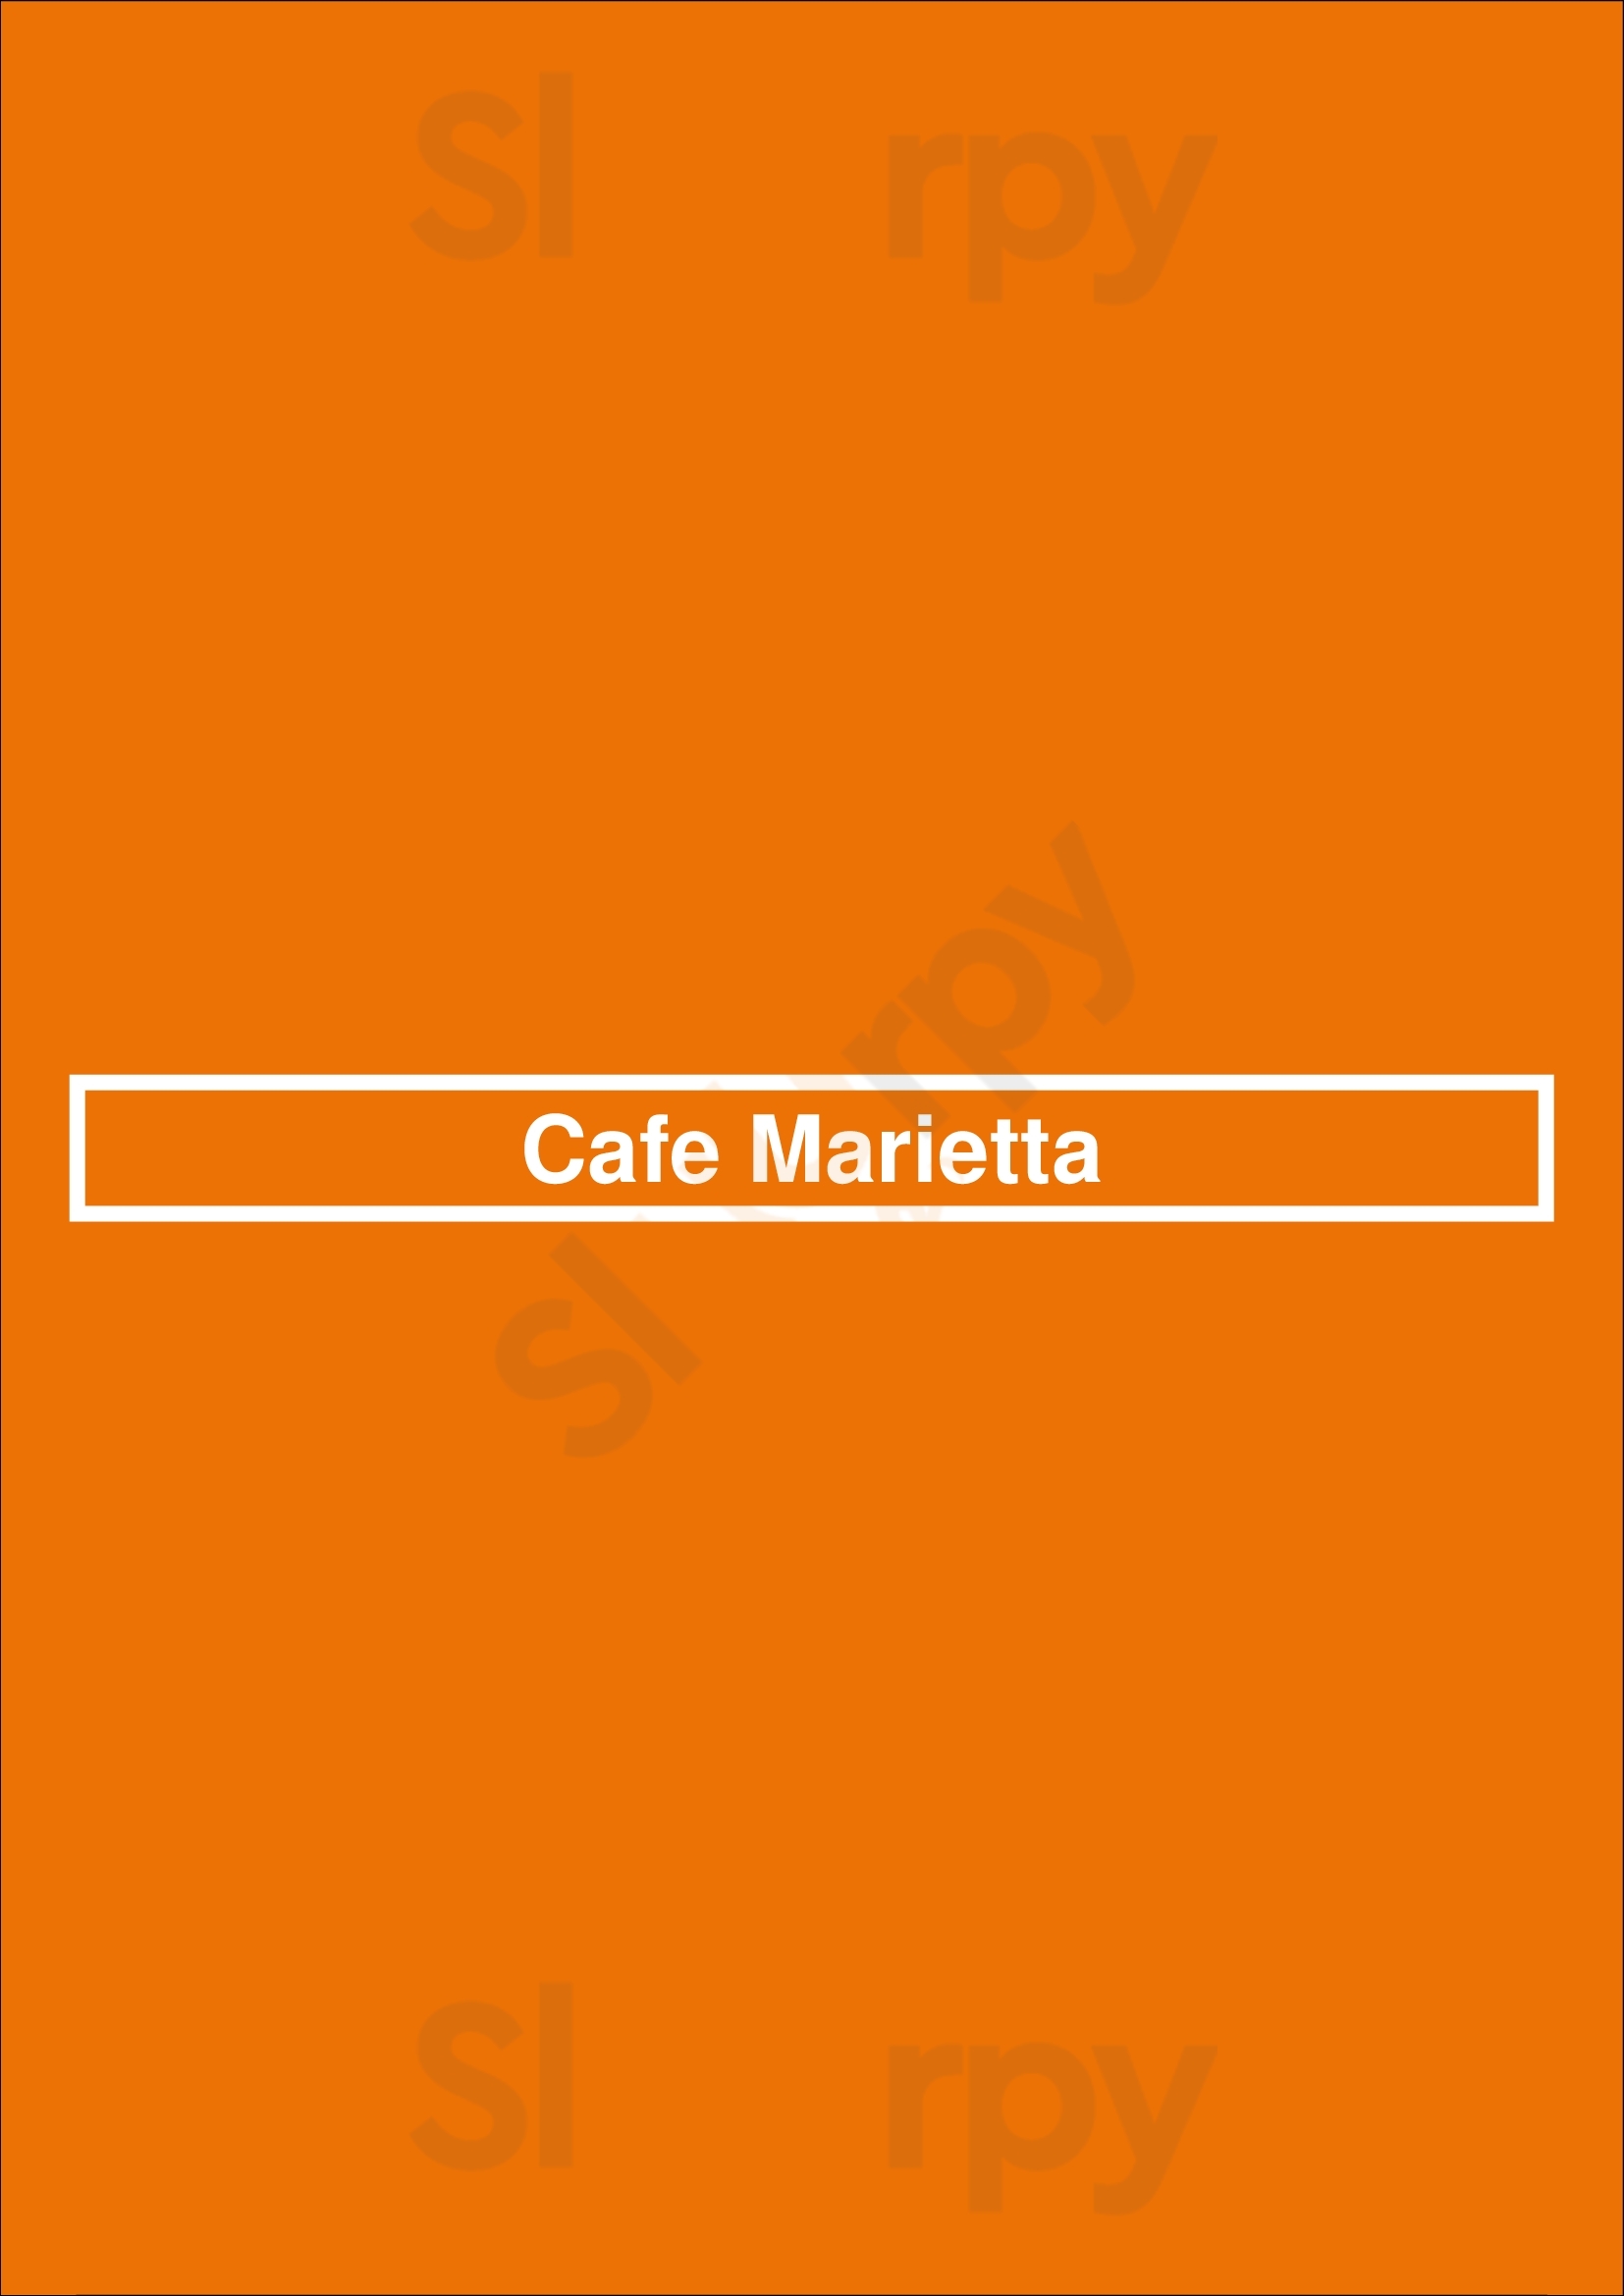 Cafe Marietta La Romana Menu - 1